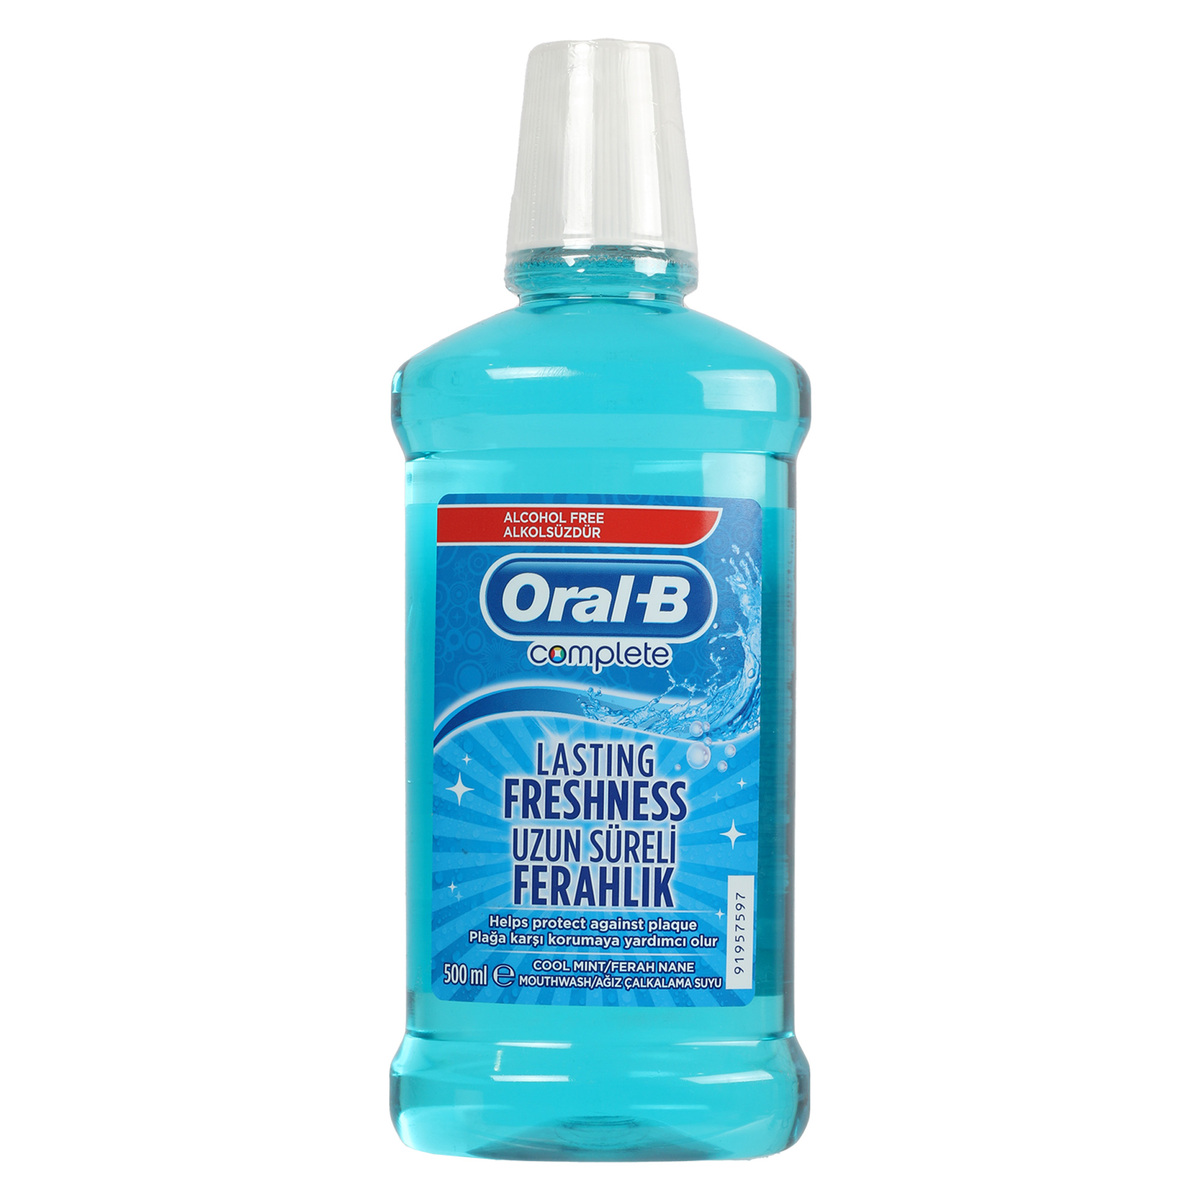 Oral B Complete Lasting Freshness Mouthwash 500ml